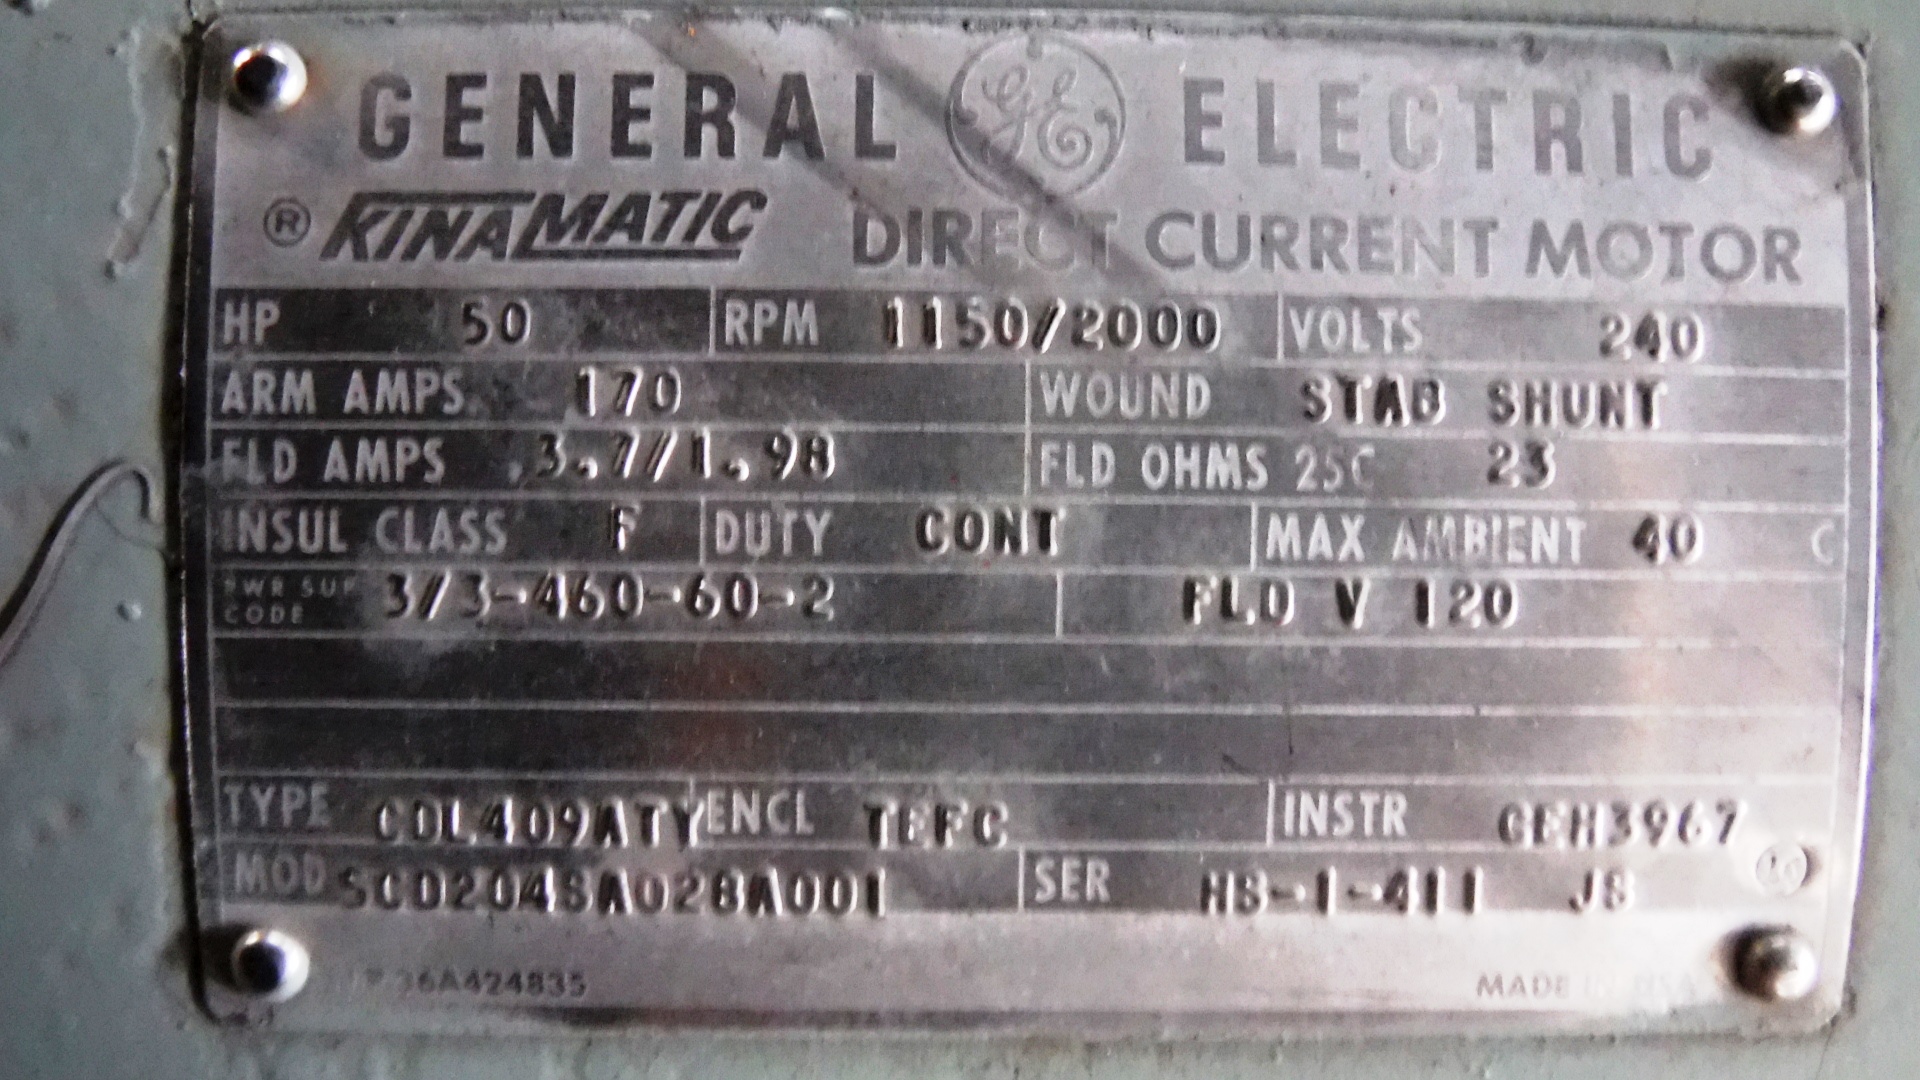 General Electric 50 HP 1150/2000 RPM 409ATY DC Motors 81521